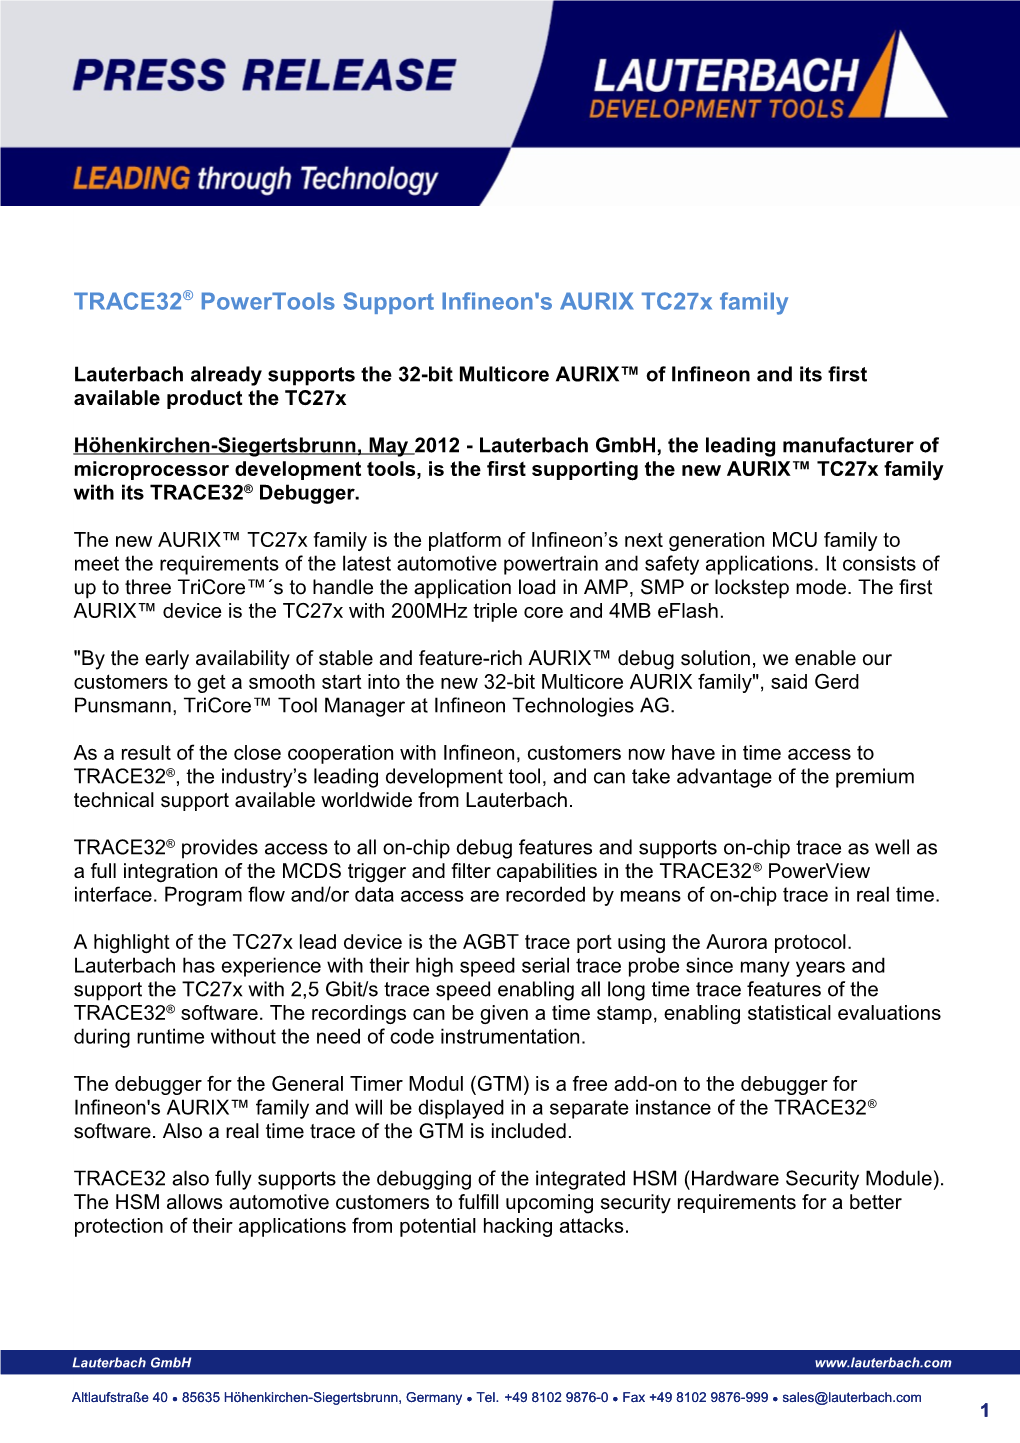 TRACE32 Powertools Support Infineon's AURIX Tc27x Family